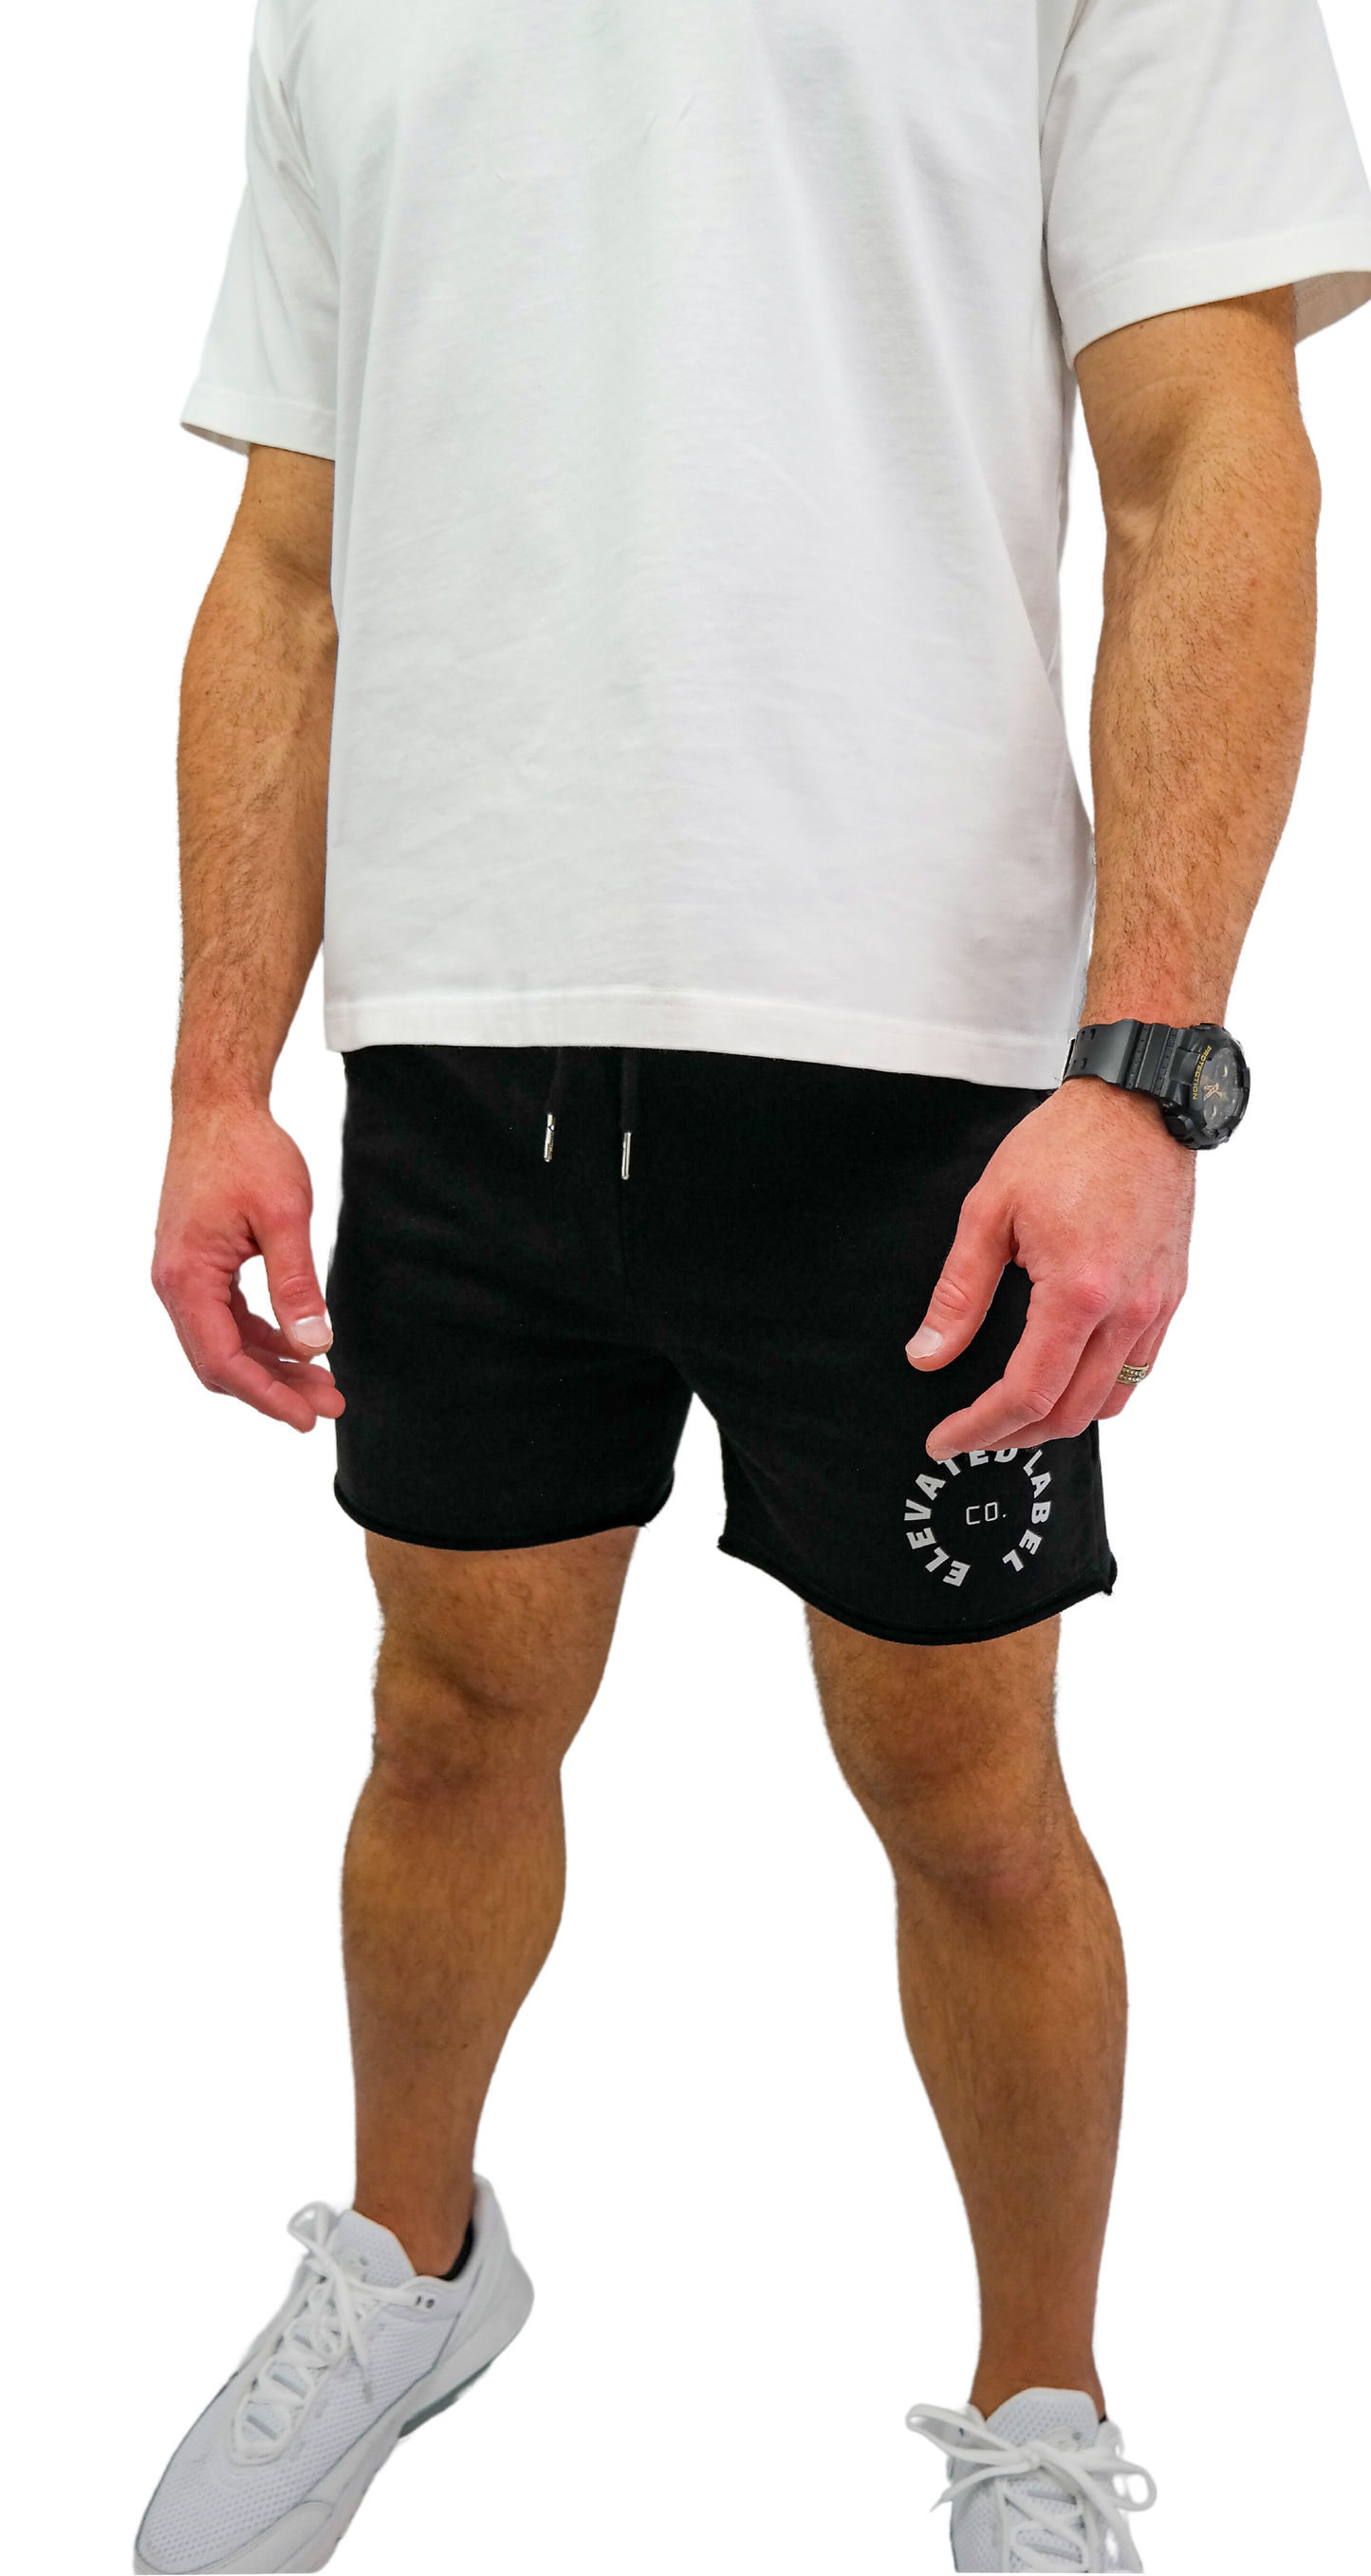 Men's comfort shorts